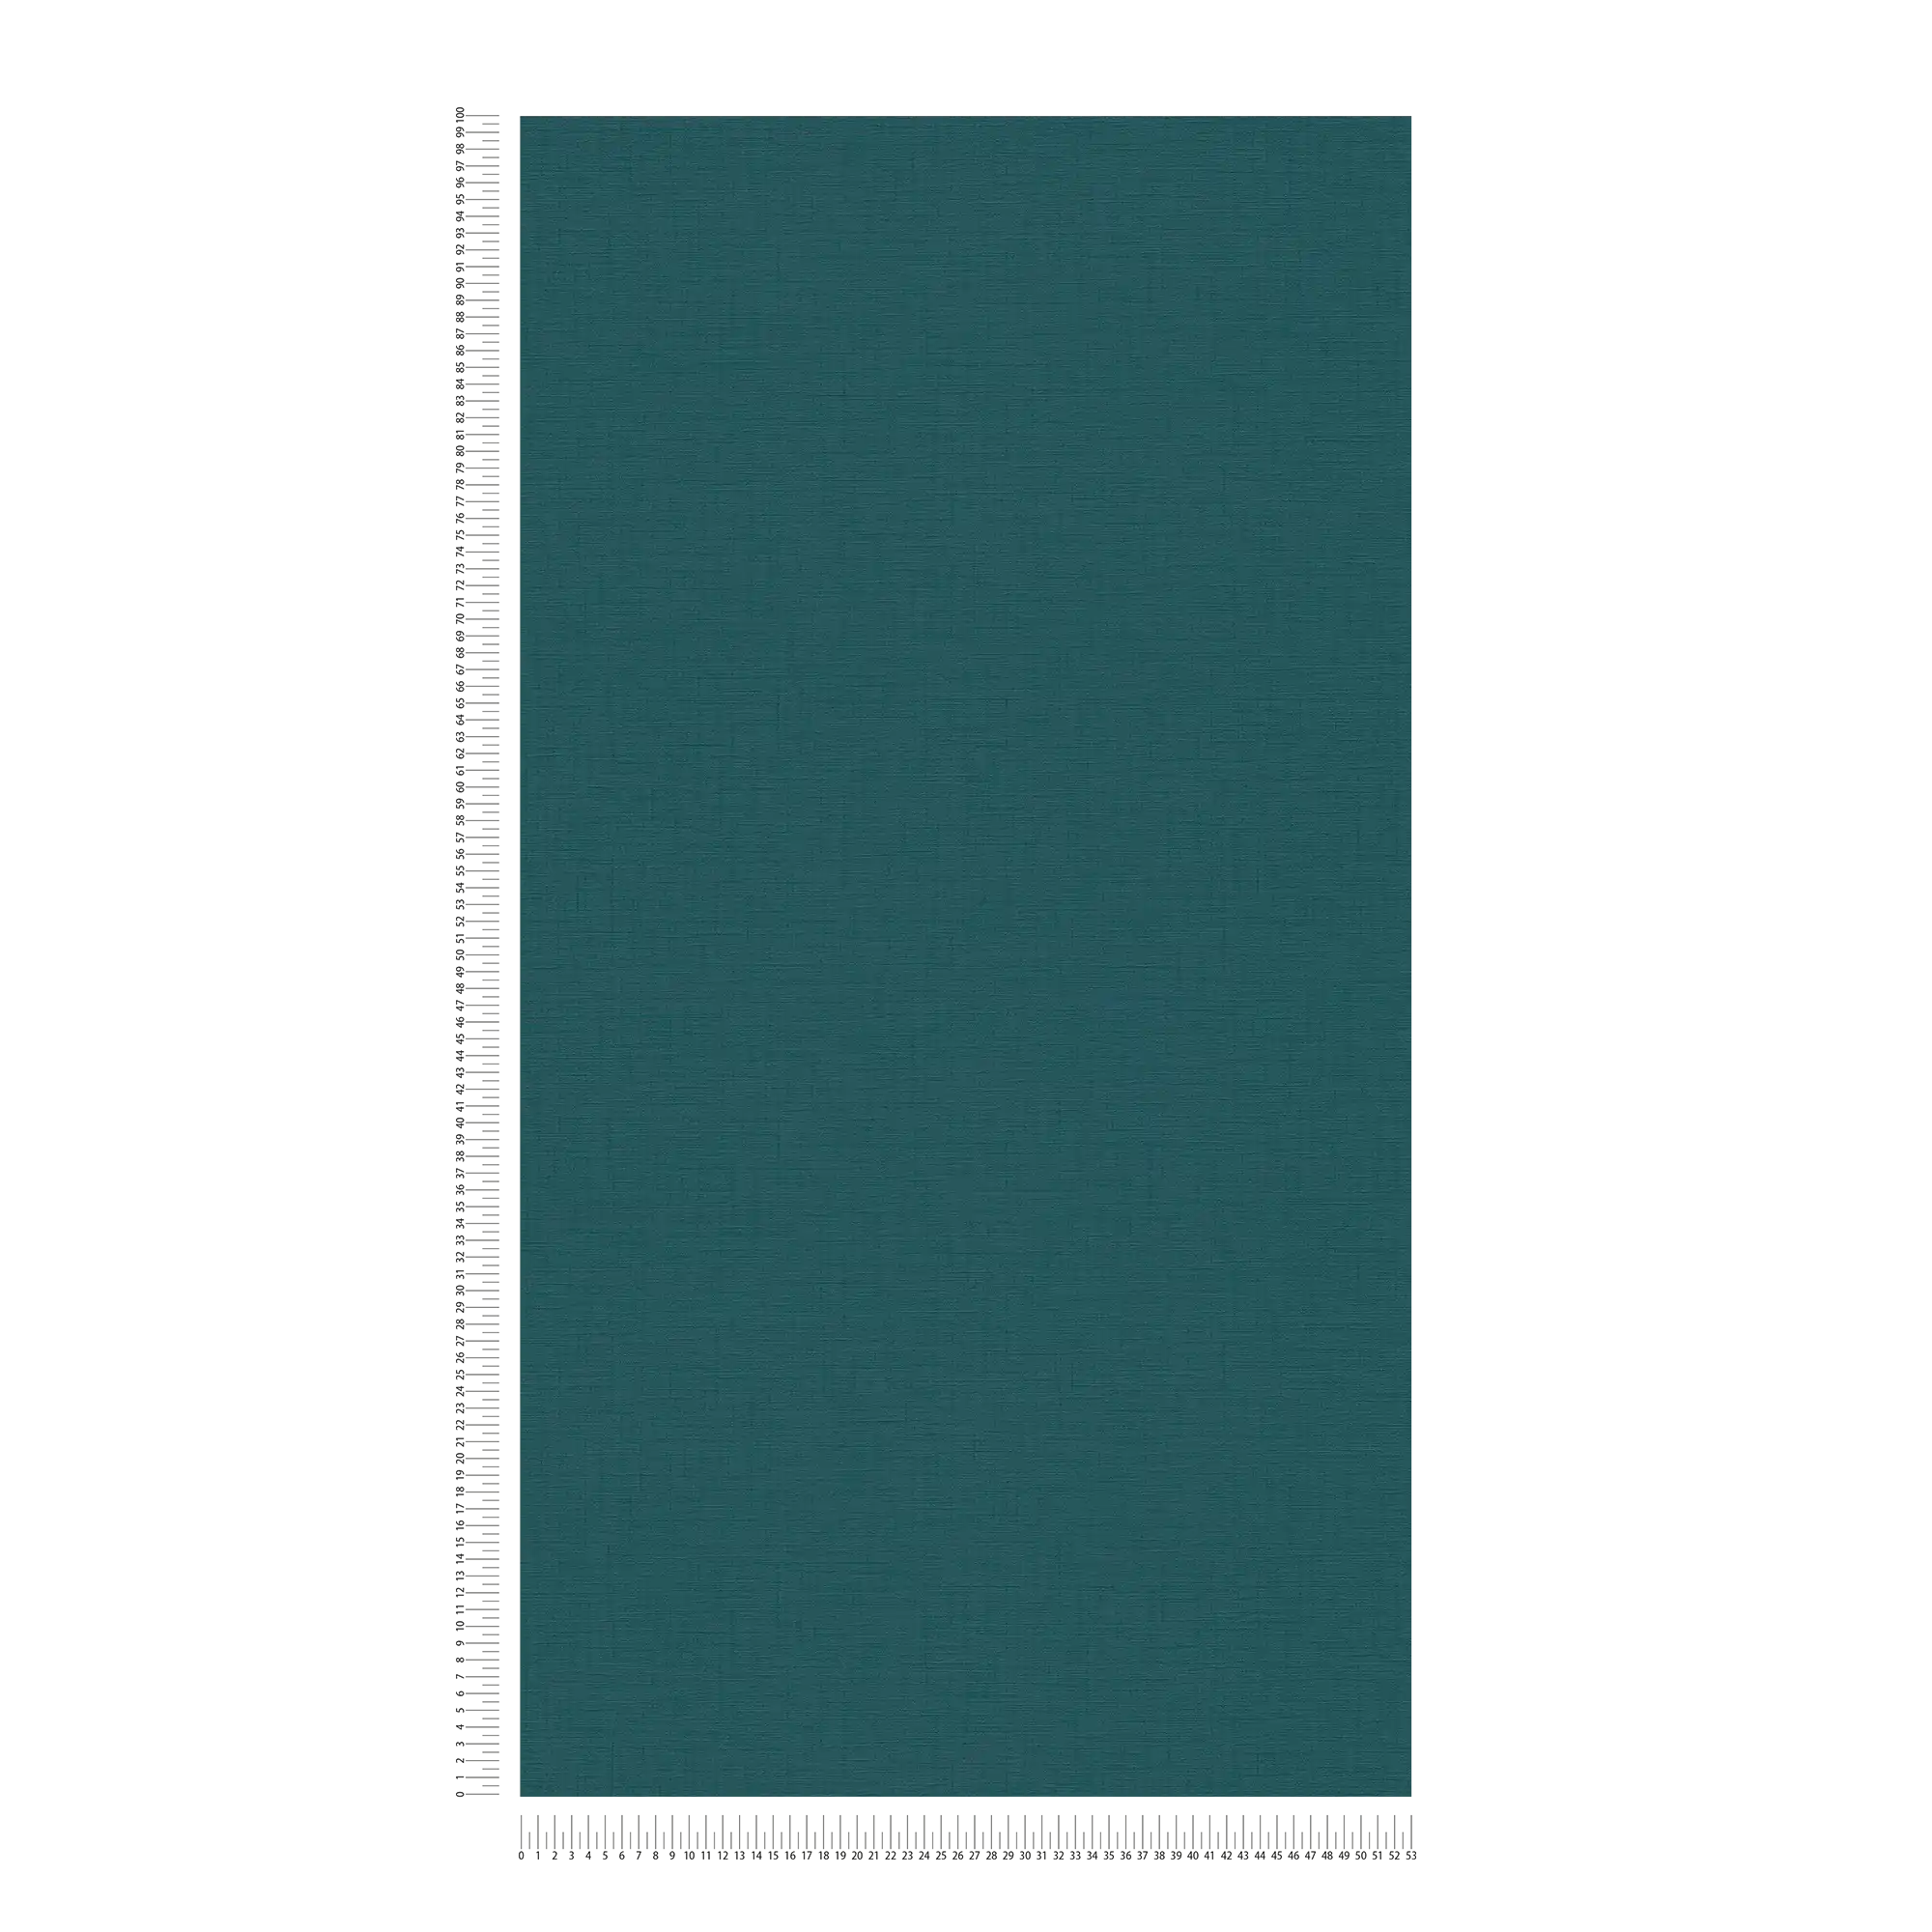             Papel pintado de colores lisos con estructura de lino - azul, verde
        